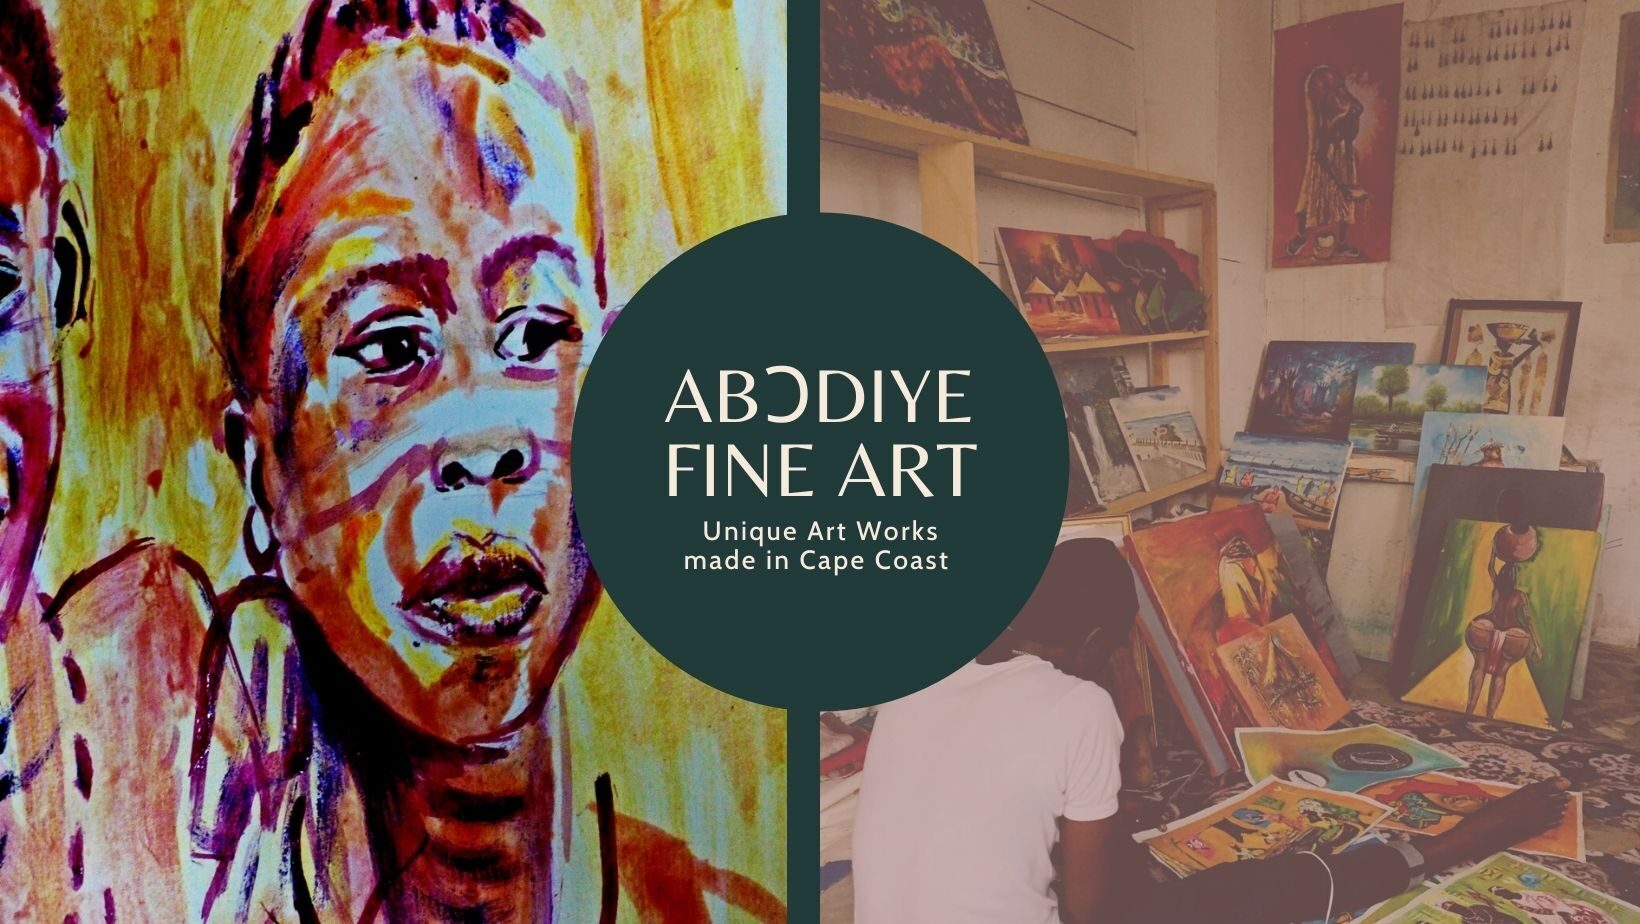 Abɔdiye Fine Art